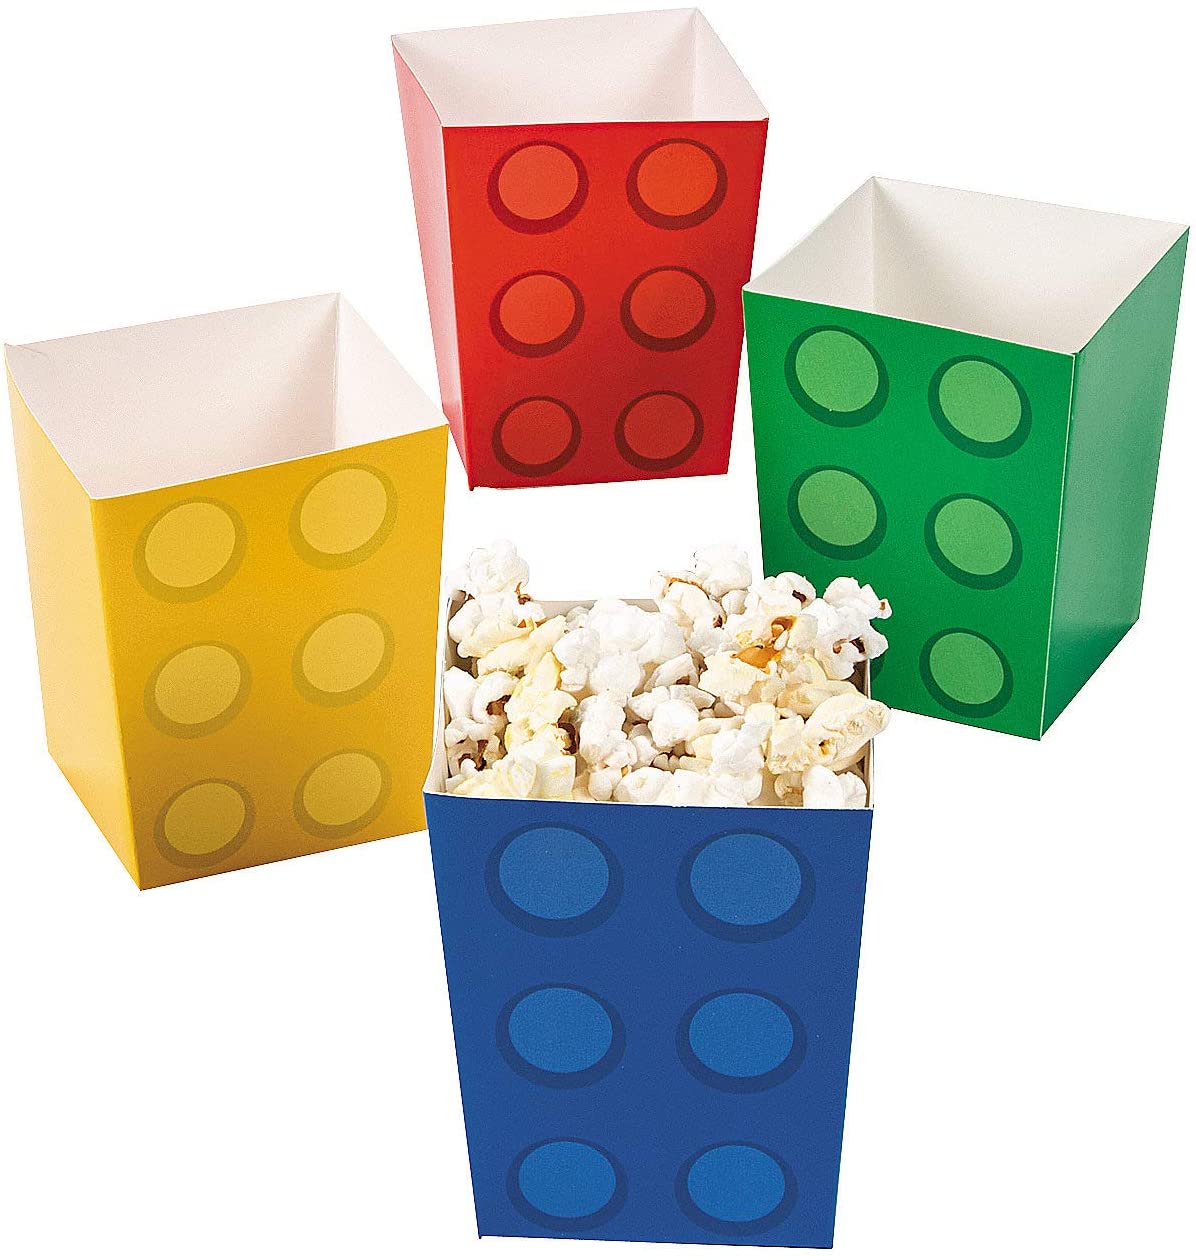 lego-party-ideas-popcorn-boxes